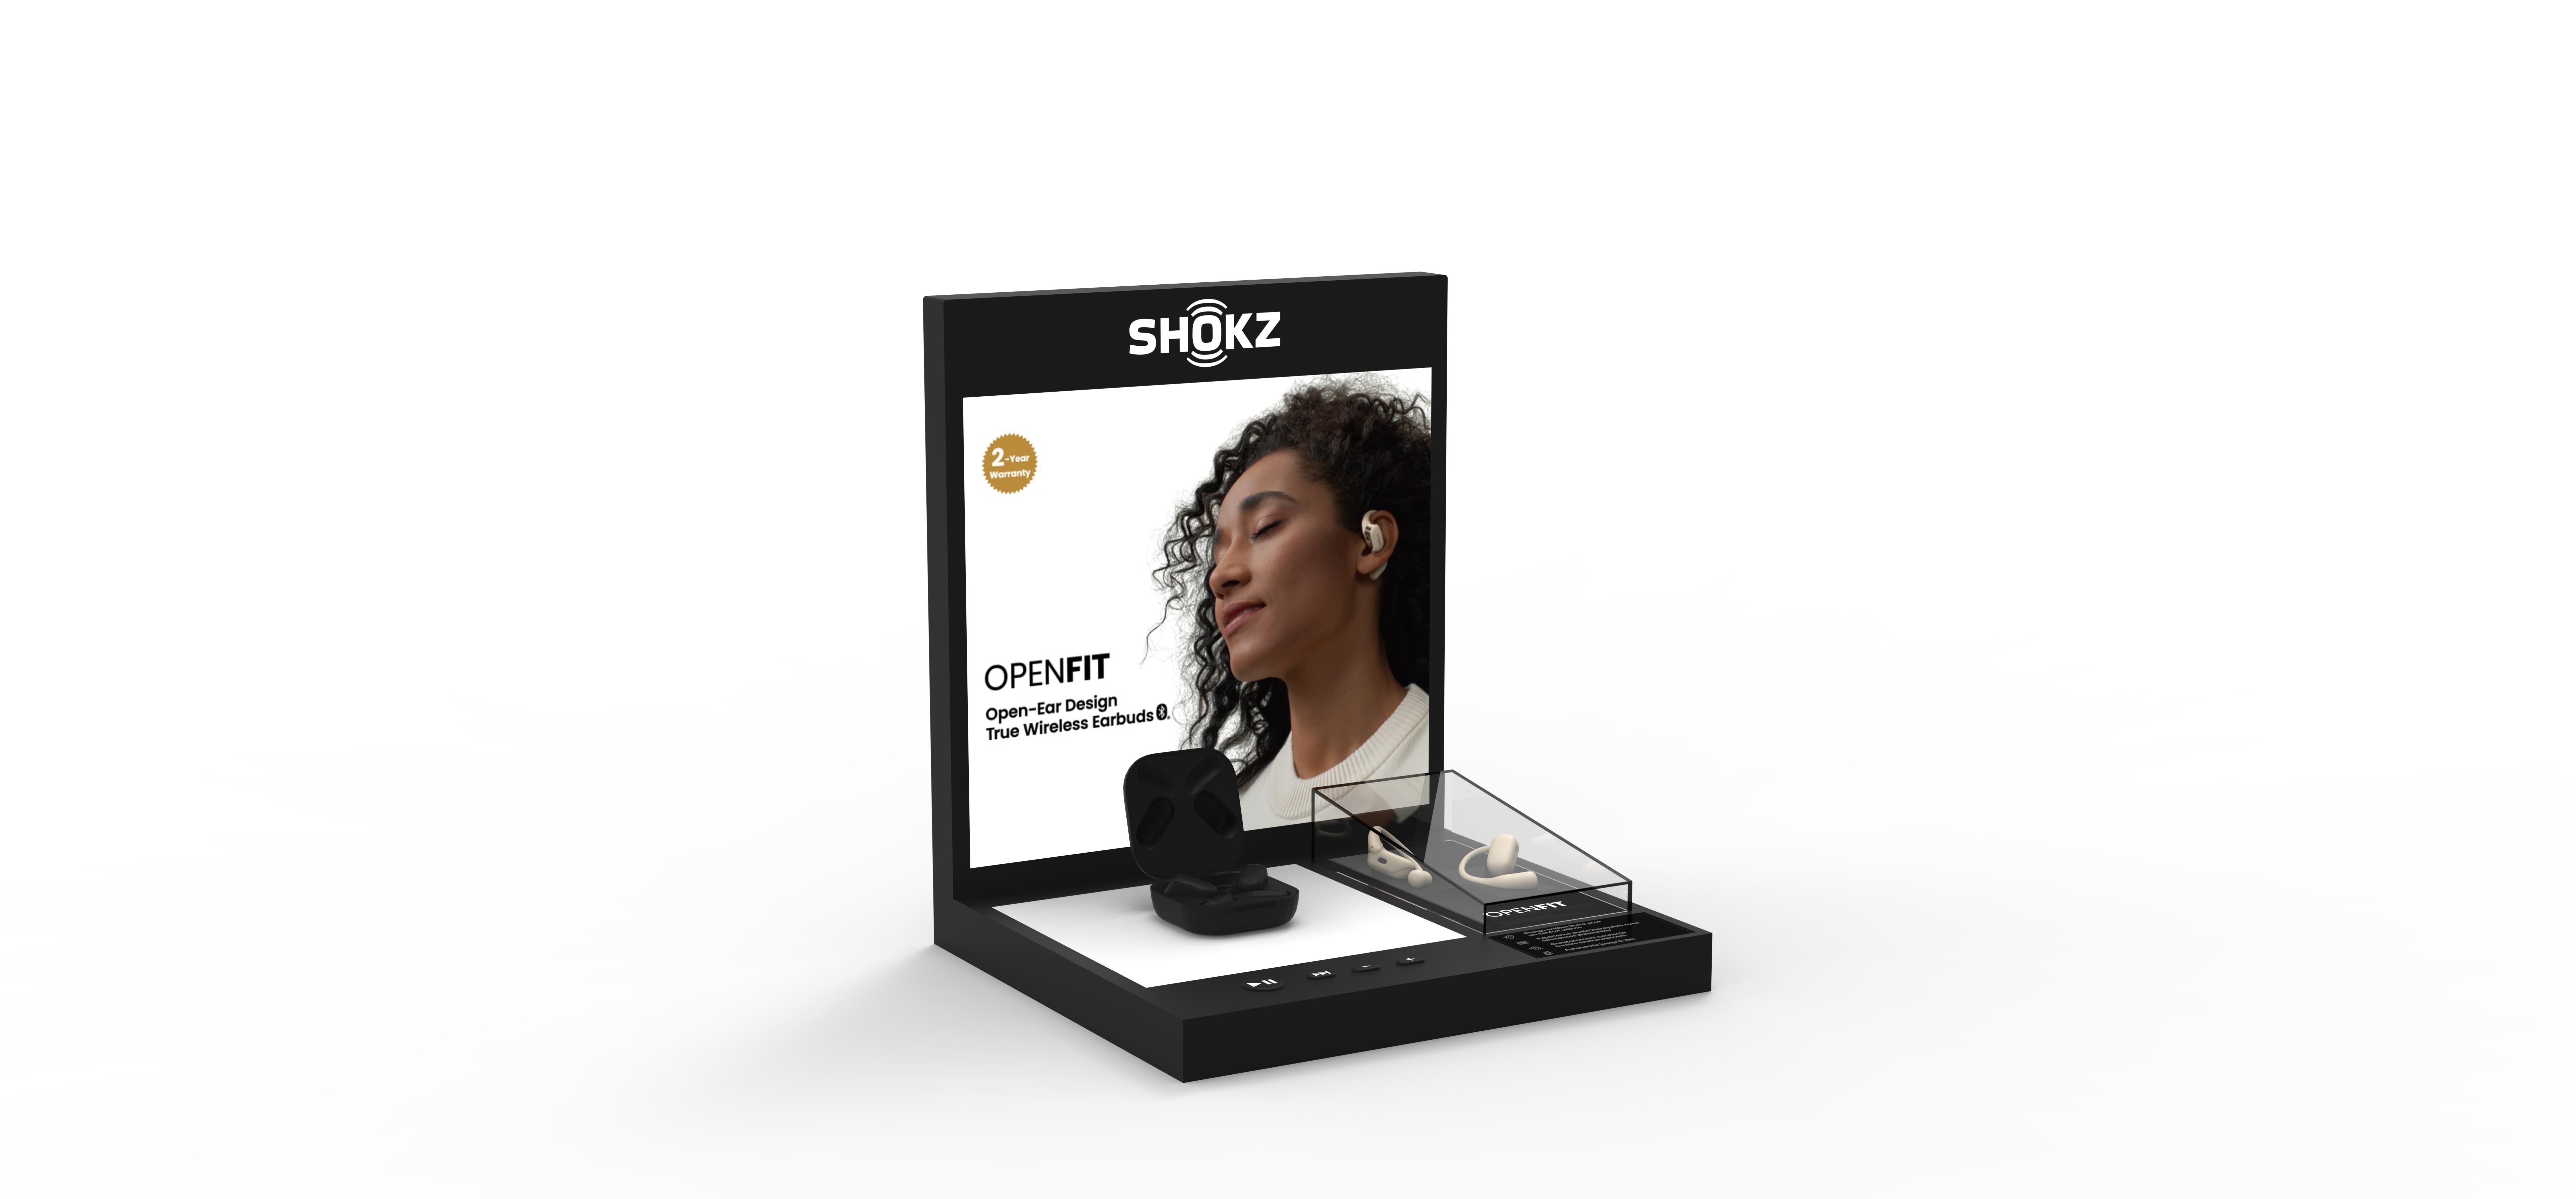 Image Shokz Tablette Standard 2.0 (OpenFit) - Anglais